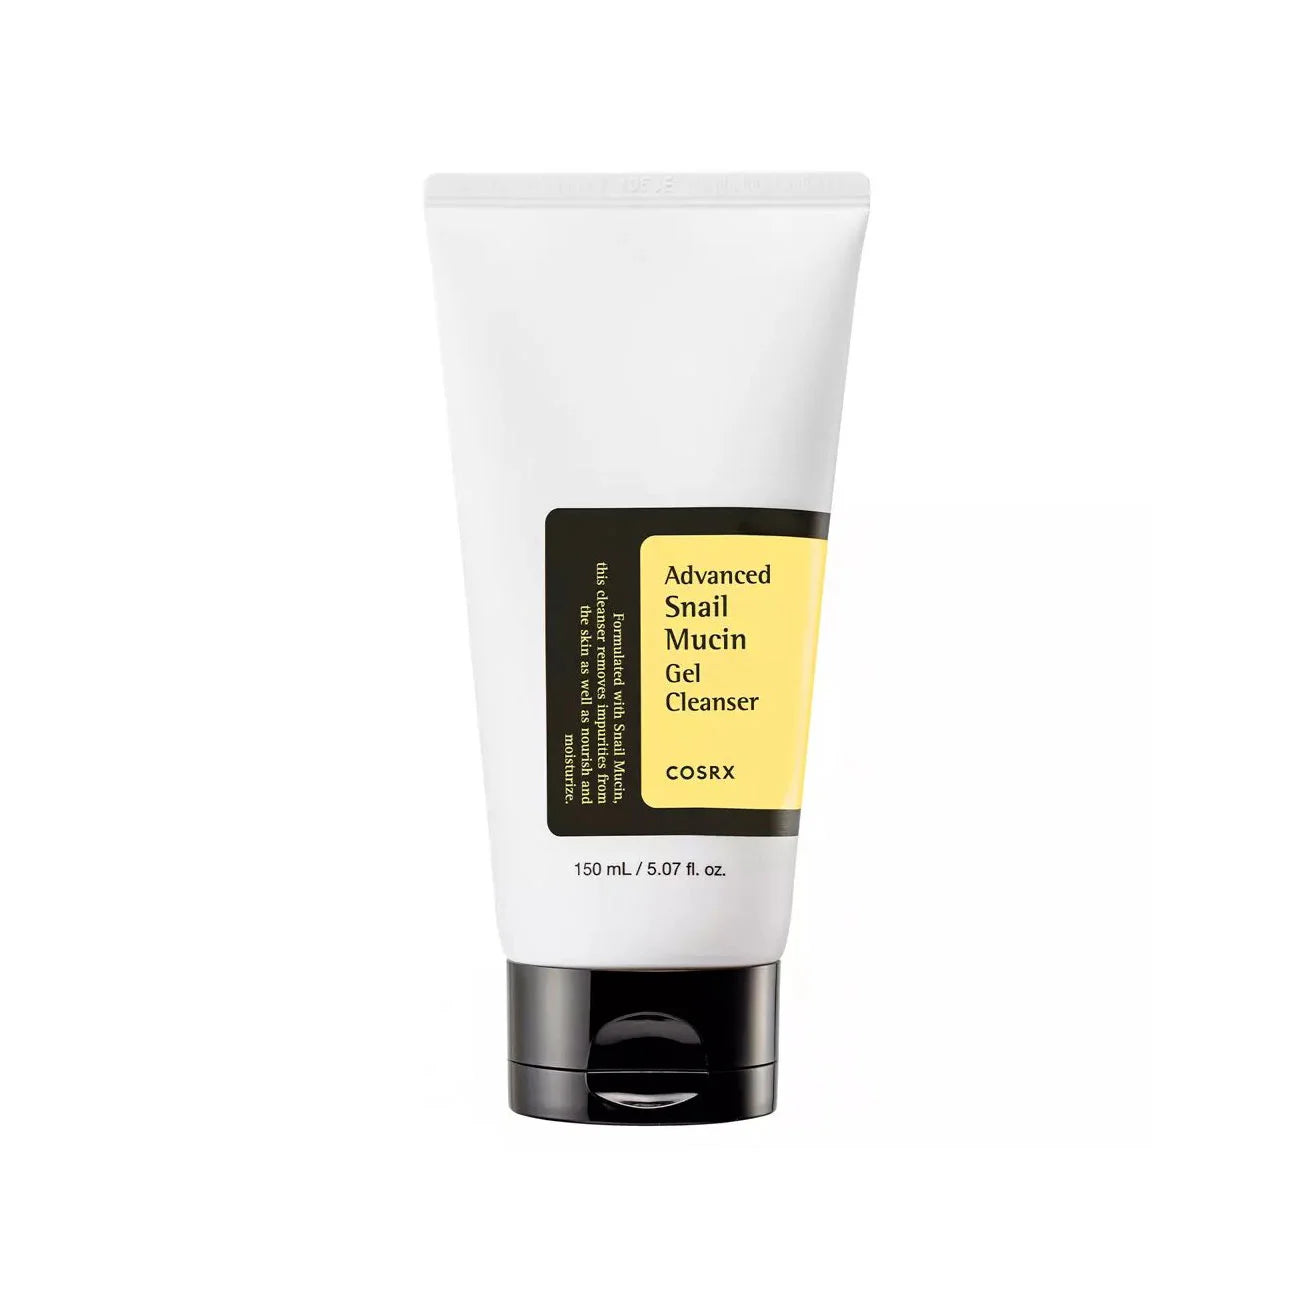 Cosrx Advanced Snail Mucin Power Gel Cleanser best seller essence Korean skin care for dry sensitive irritated skin redness oil-balance anti-aging inflammation acne K Beauty World